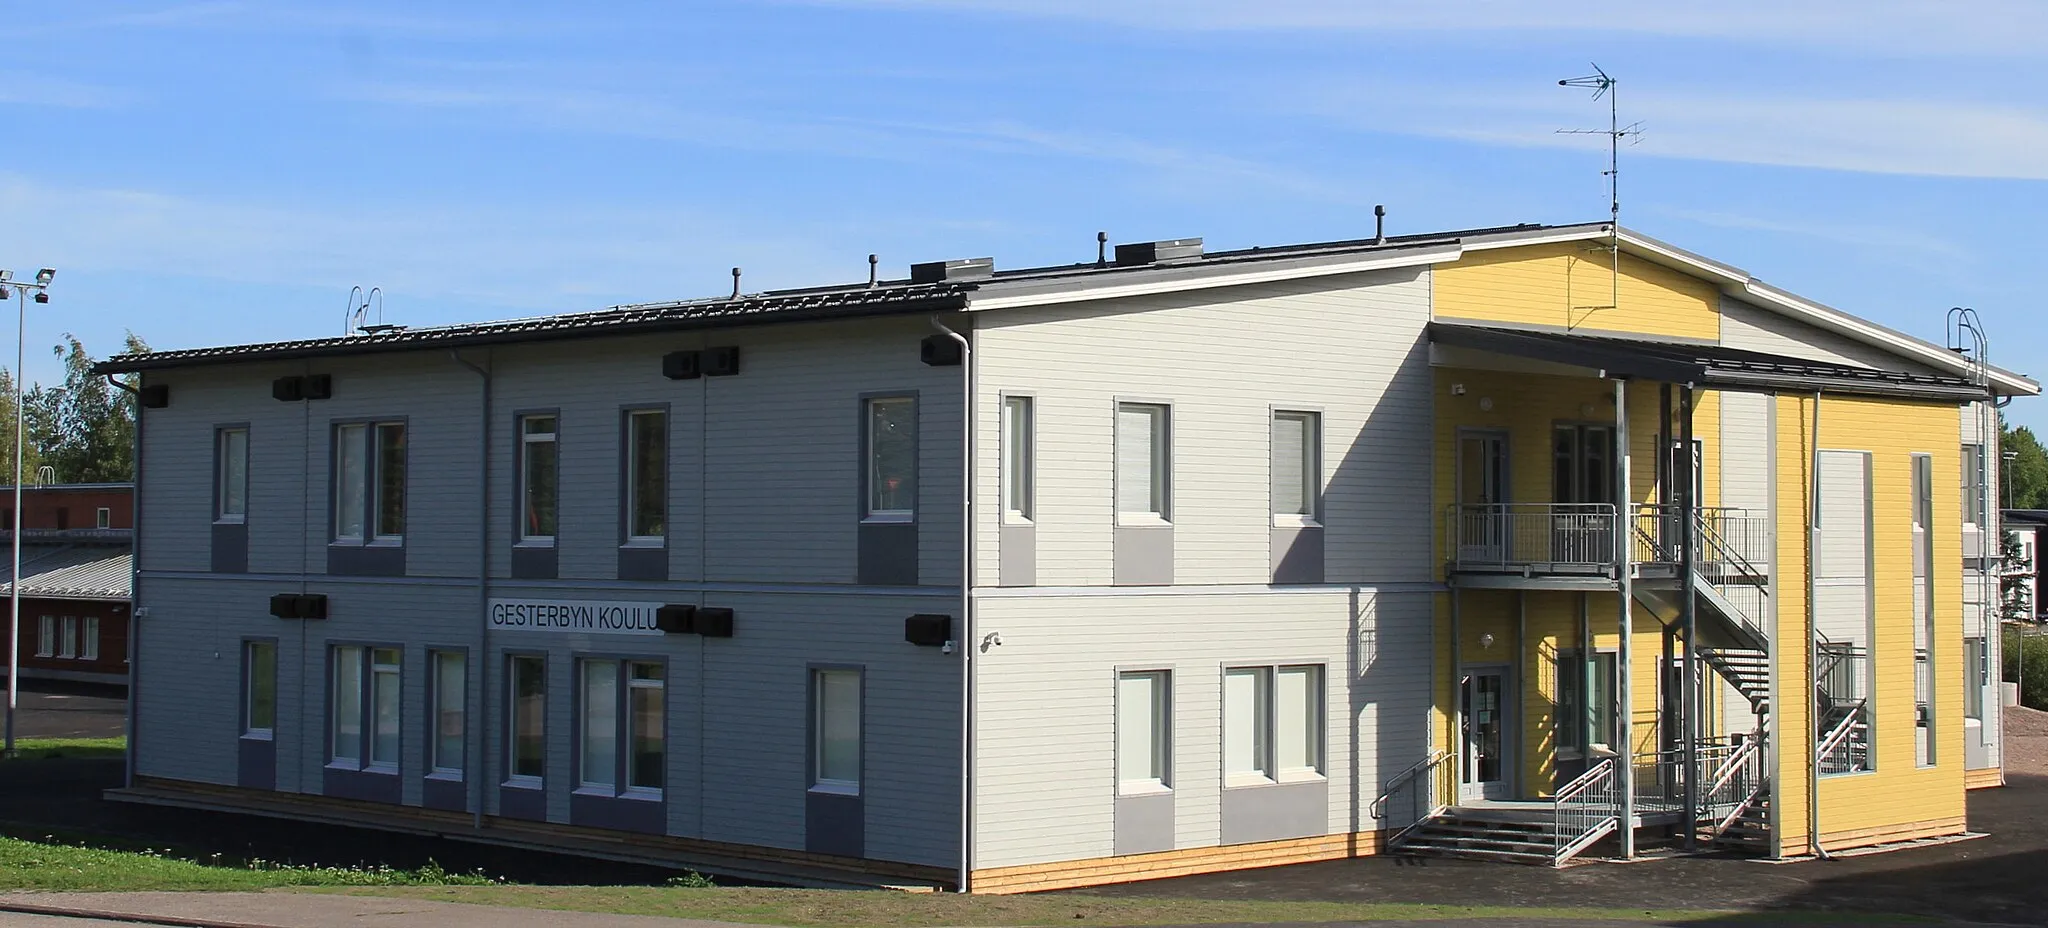 Photo showing: Gesterby temporary school building, Gesterby, Kirkkonummi, Finland.